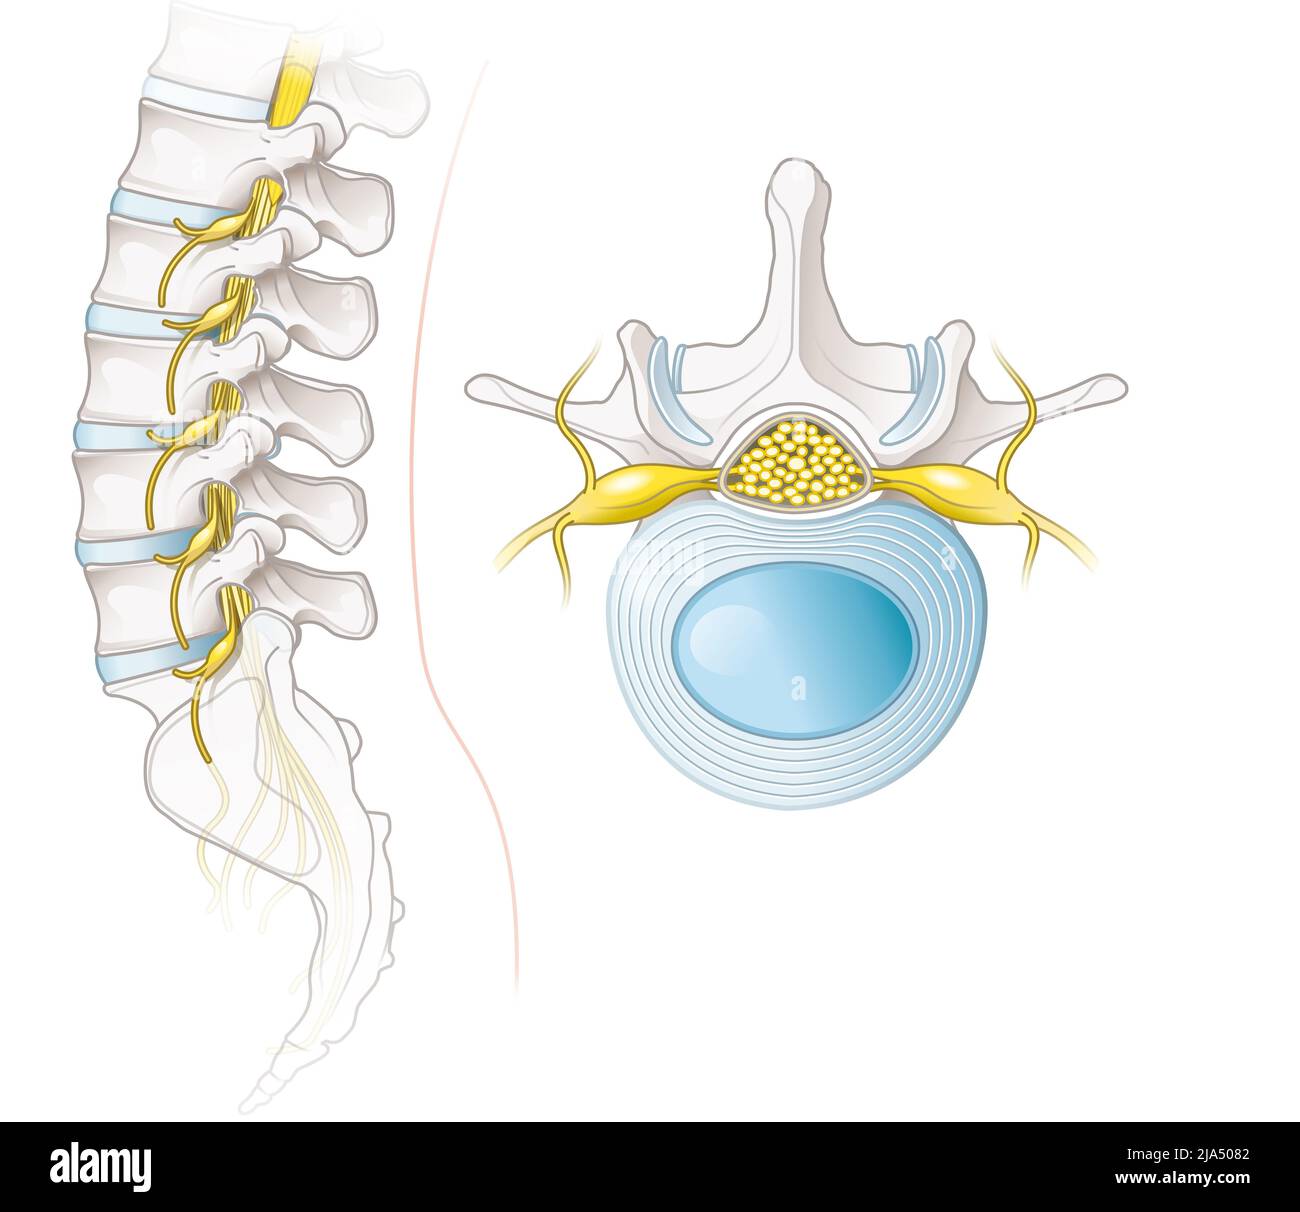 Labeled anatomical llustration showing lumbar spine and lumbar vertebra Stock Photo